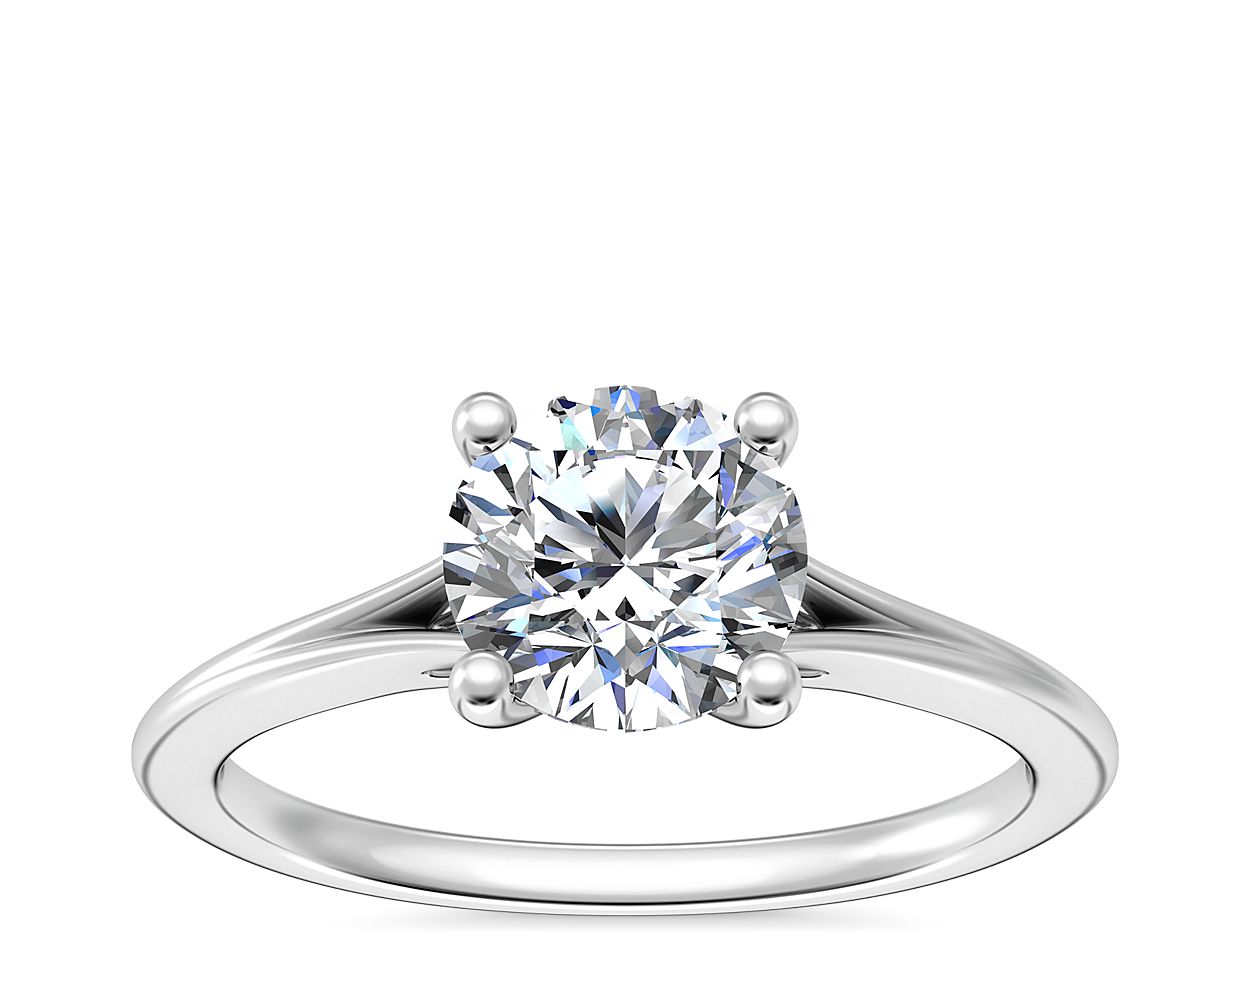 5 Carats Emerald Cut Engagement Ring. $543,000 | Emerald engagement ring  cut, Engagement ring cuts, Dream engagement rings